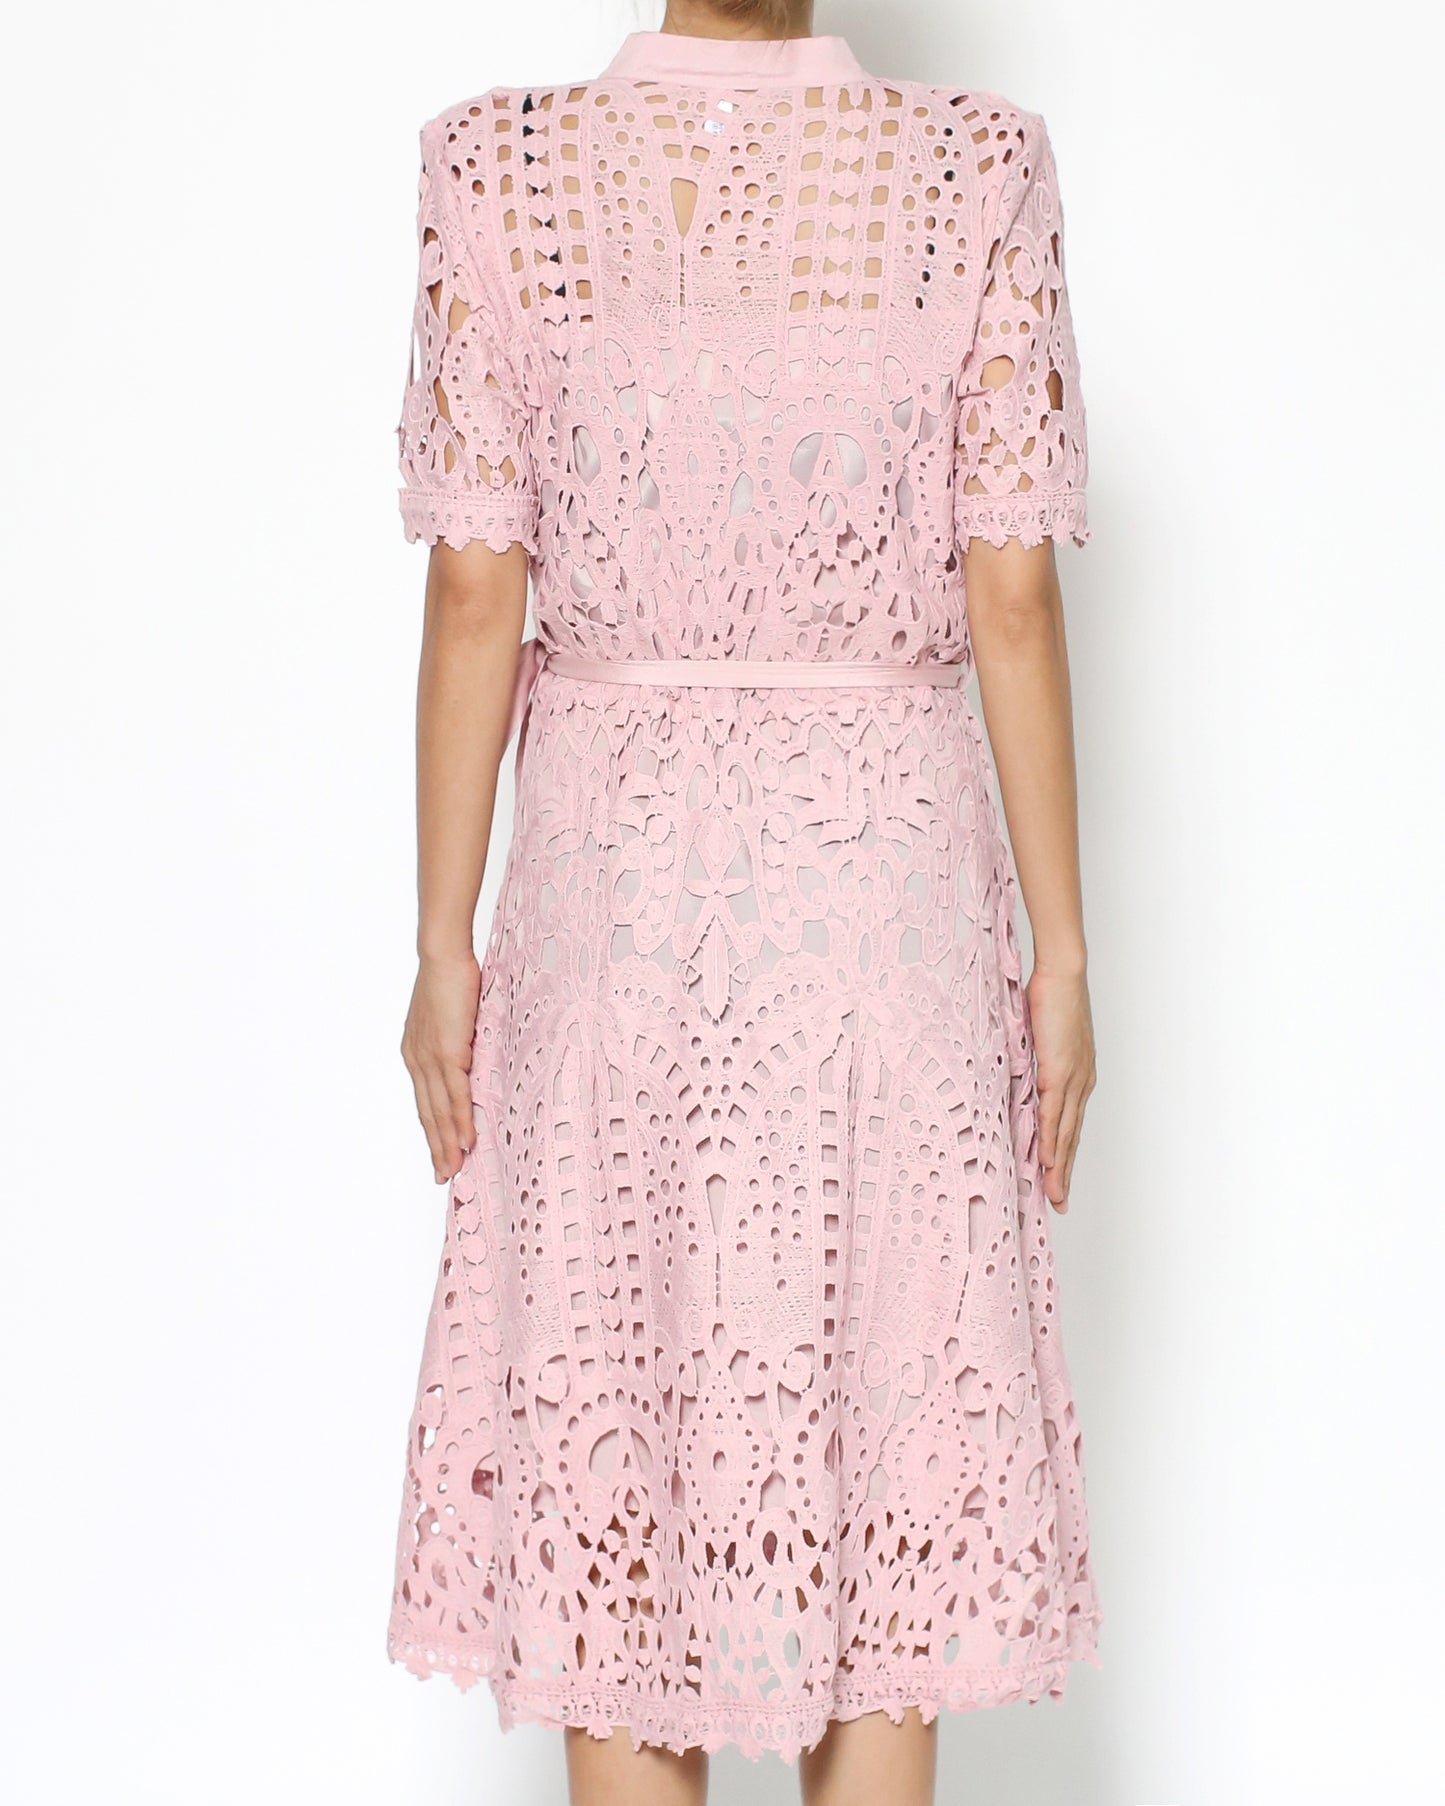 pink crochet dress with belt *pre-order*